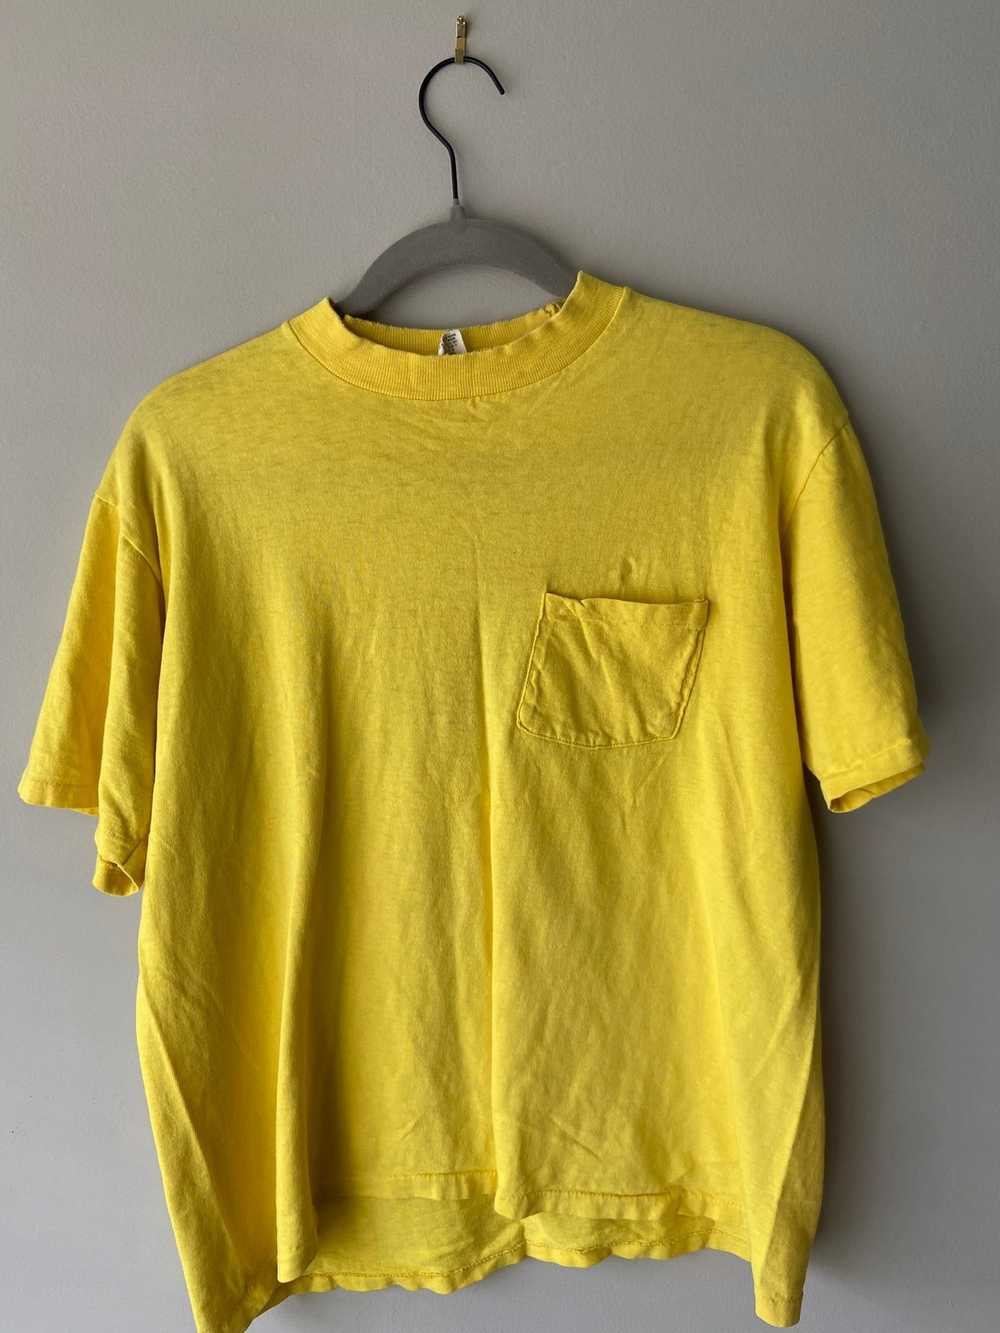 Vintage Vintage Yellow T-Shirt - image 2